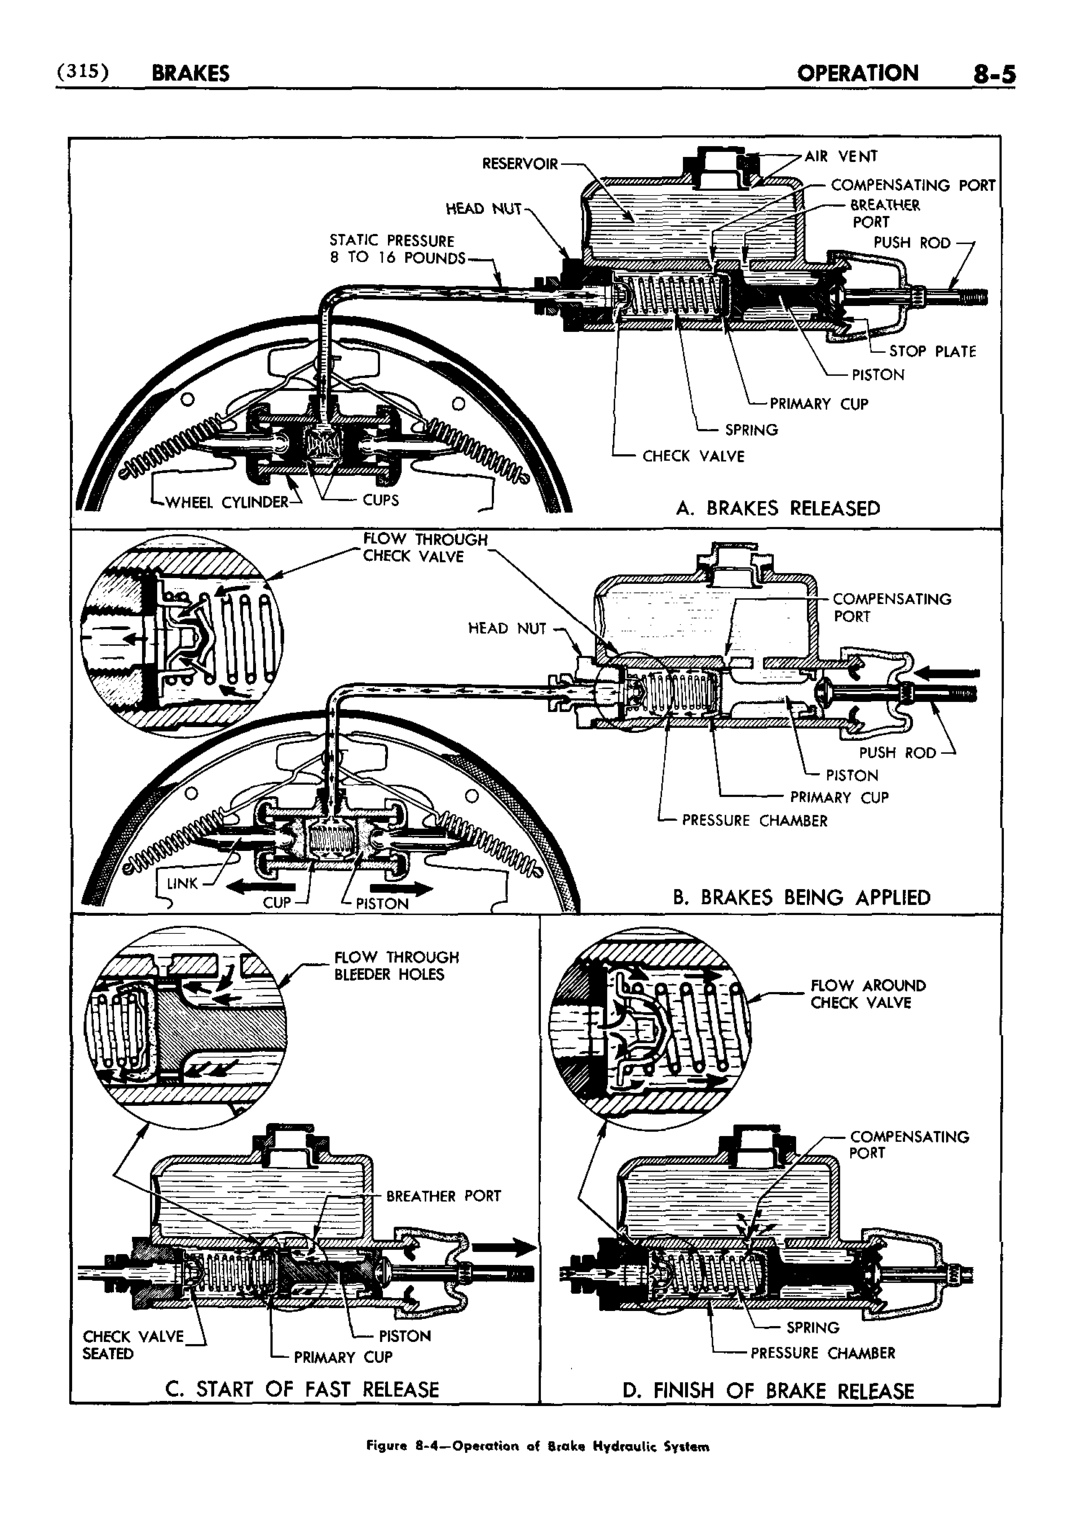 n_09 1952 Buick Shop Manual - Brakes-005-005.jpg